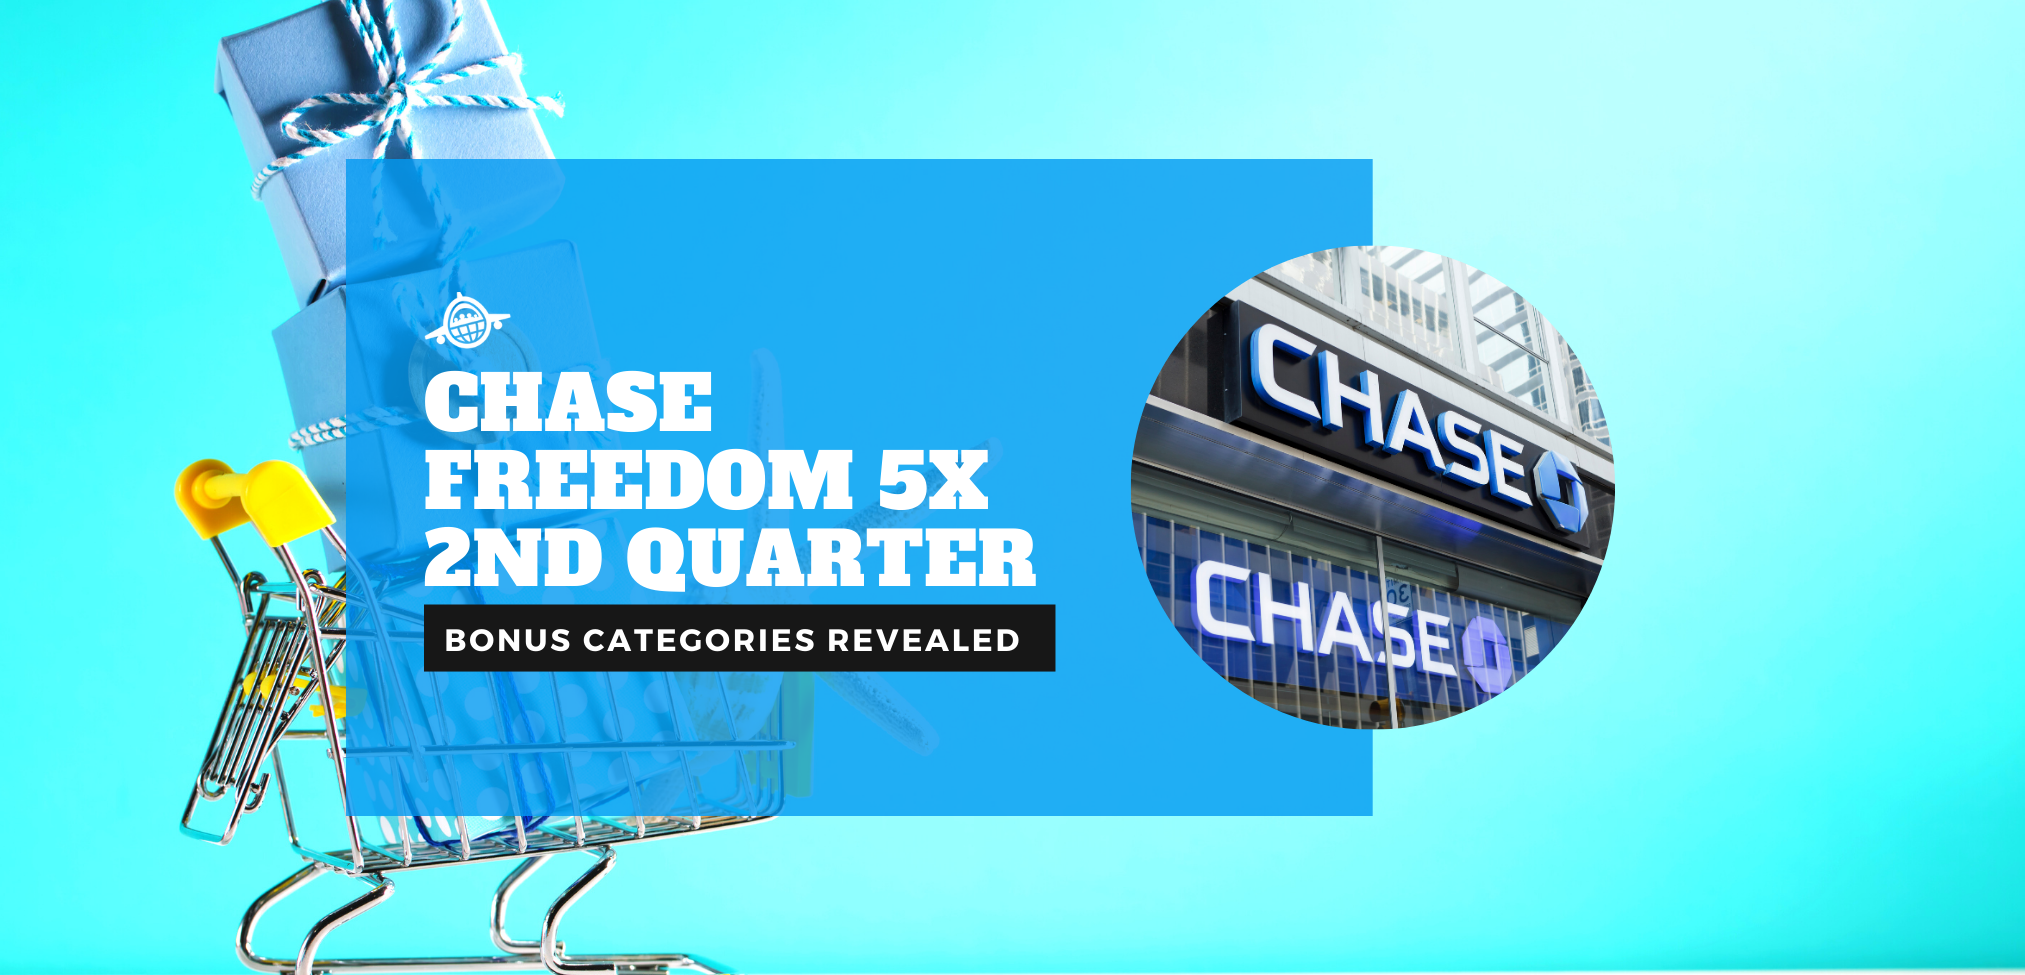 Chase Freedom Bonus Categories Quarter 2 2021 Great 5X Opportunity!